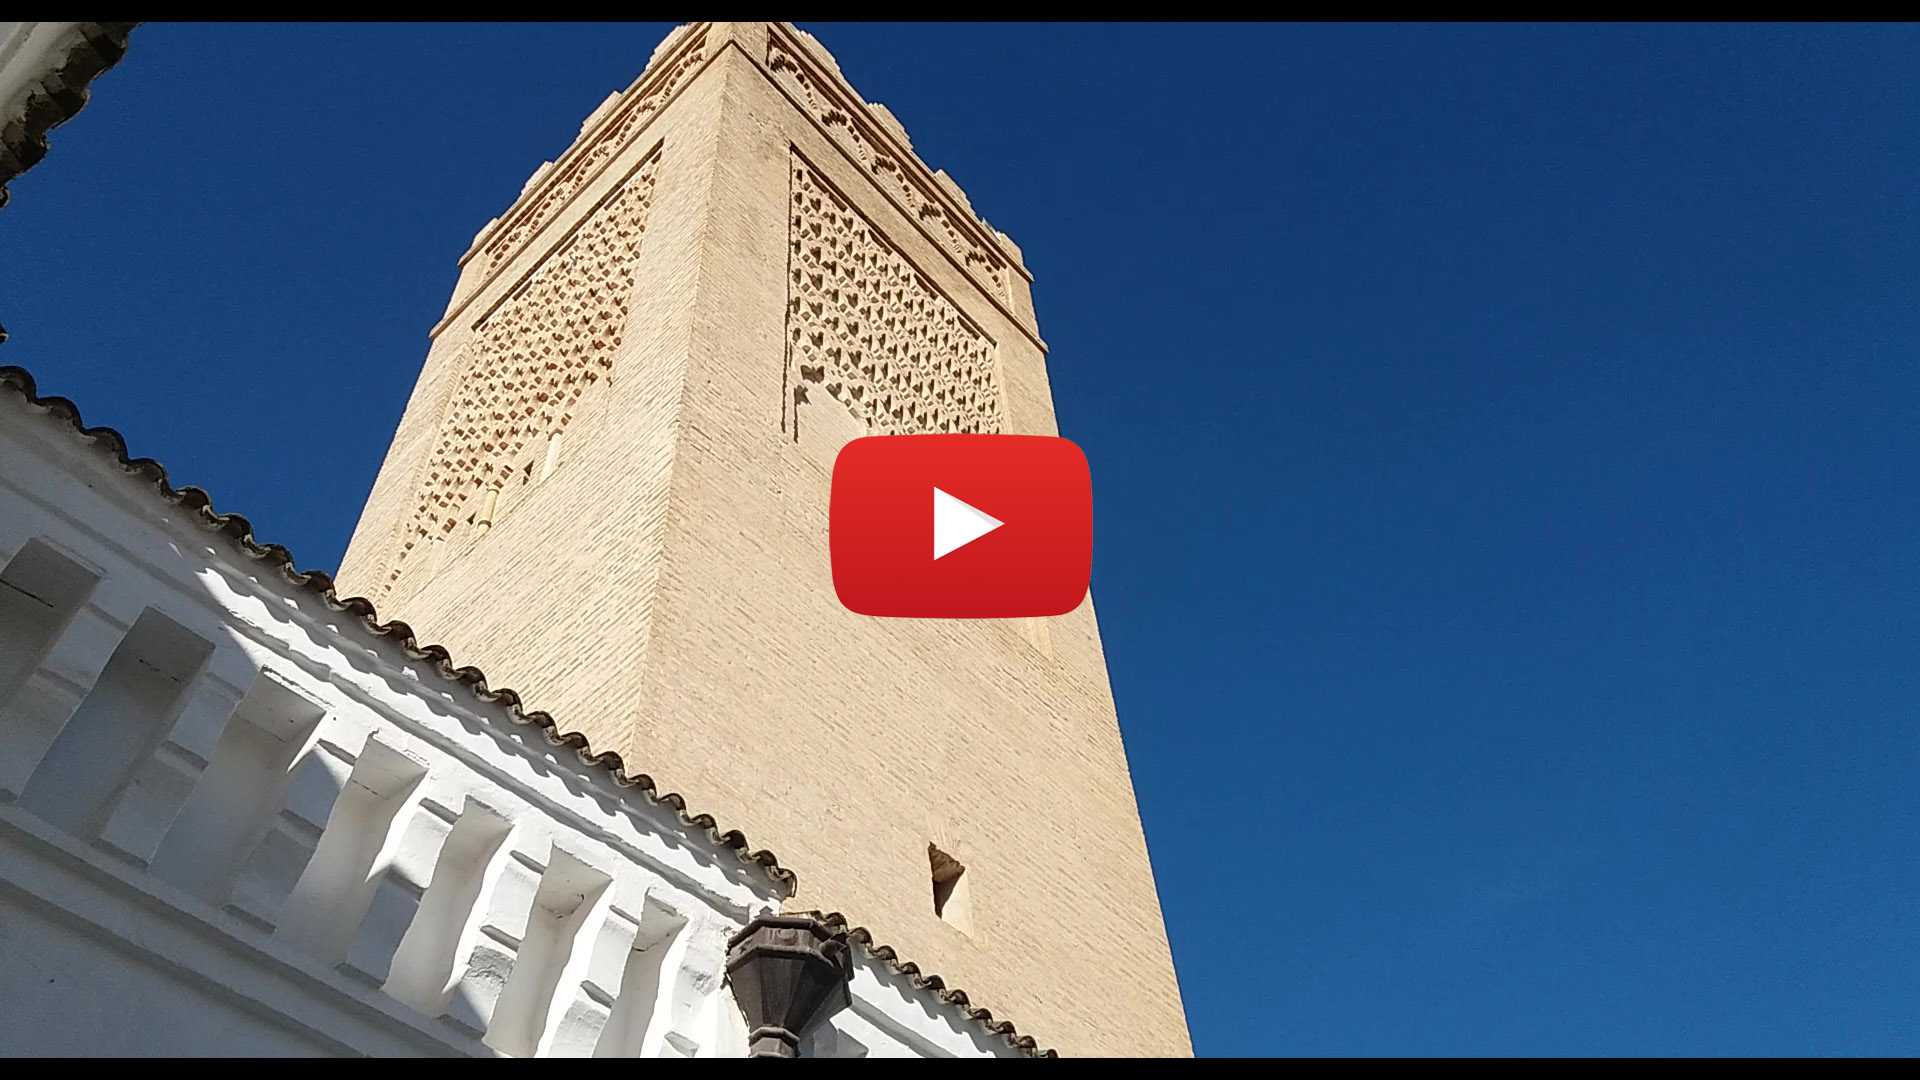 The Great Mosque of Tlemcen